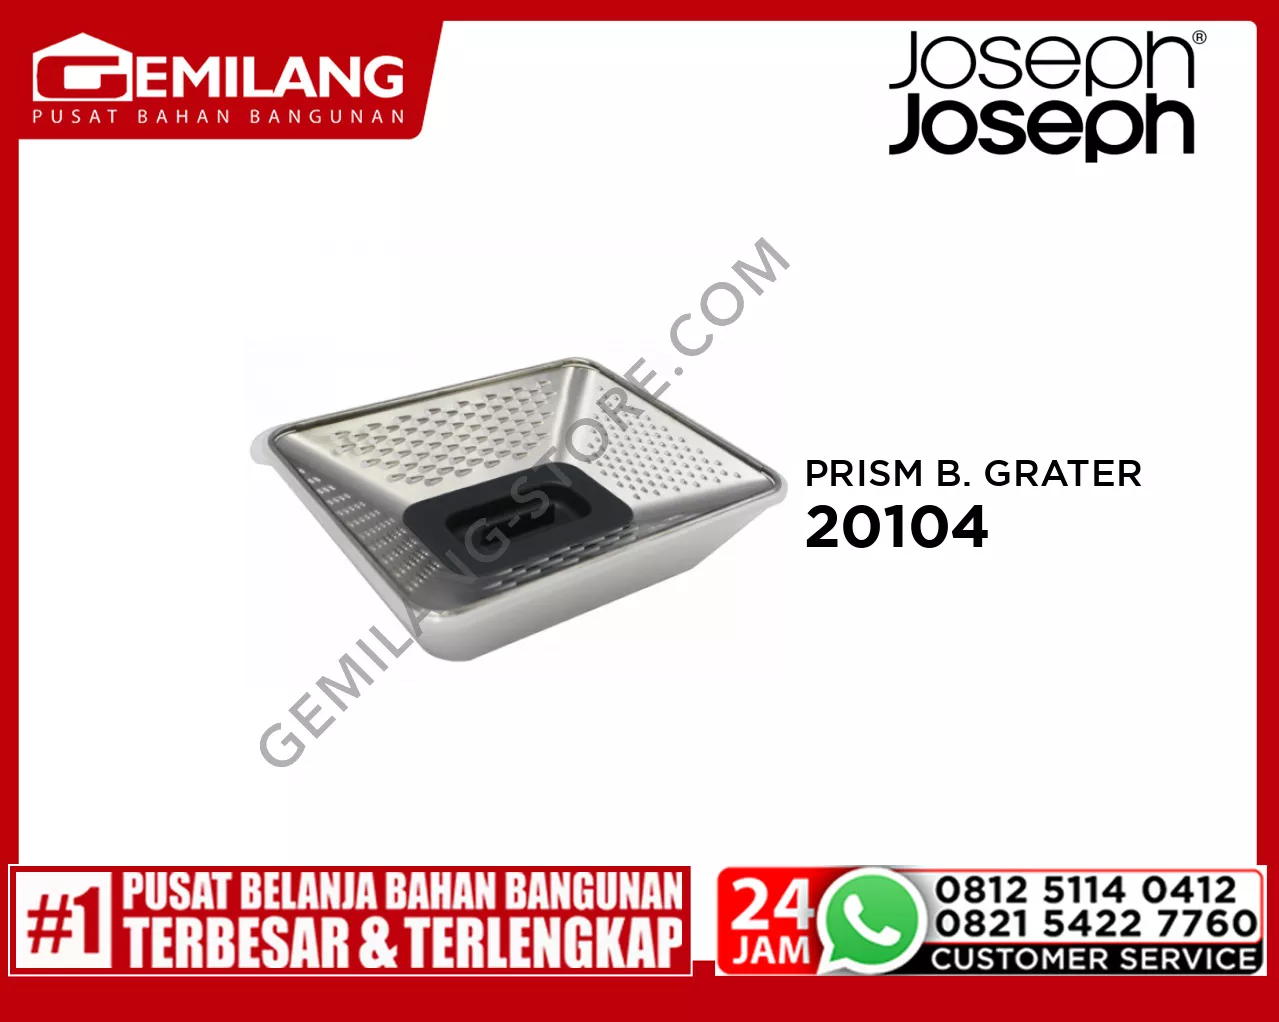 JOSEPH JOSEPH PRISM BOX GRATER 20104